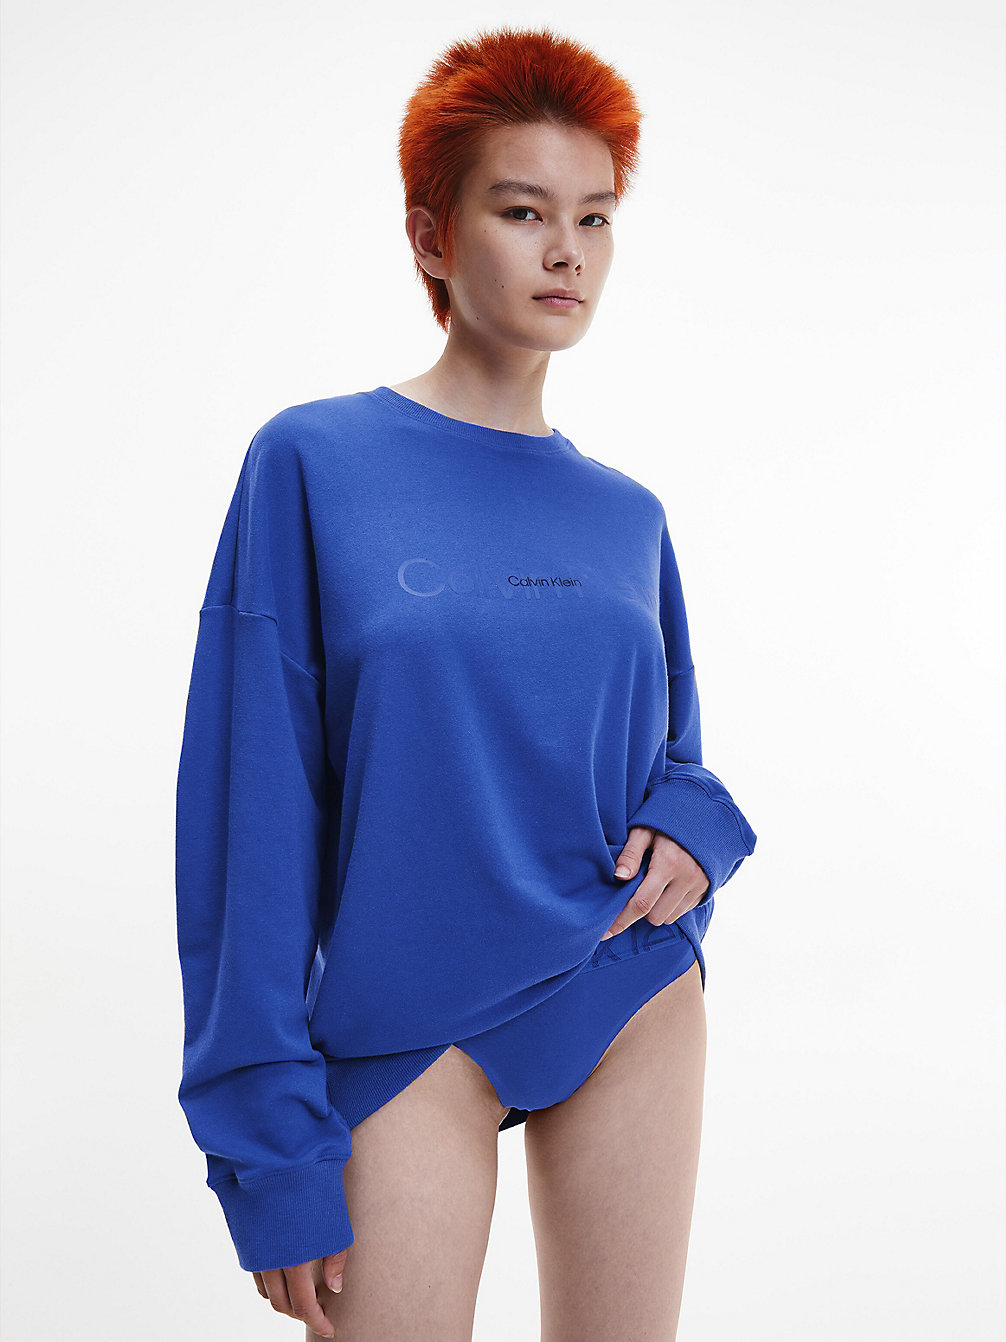 CLEMATIS > Pyjama-Top – Embossed Icon > undefined Damen - Calvin Klein